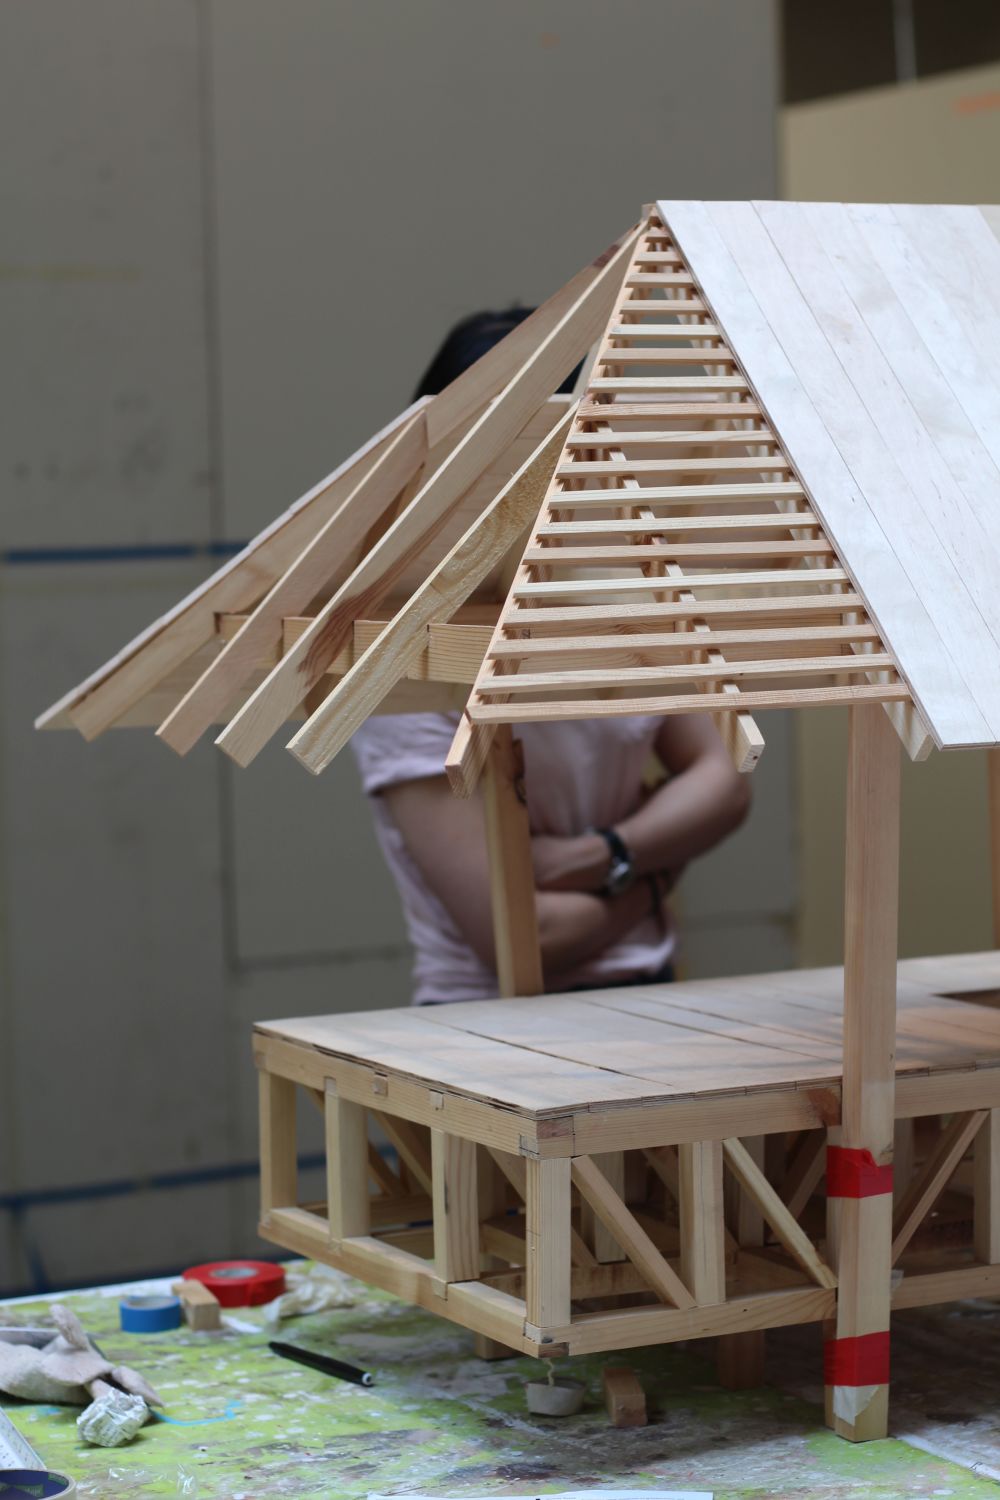 Timber model